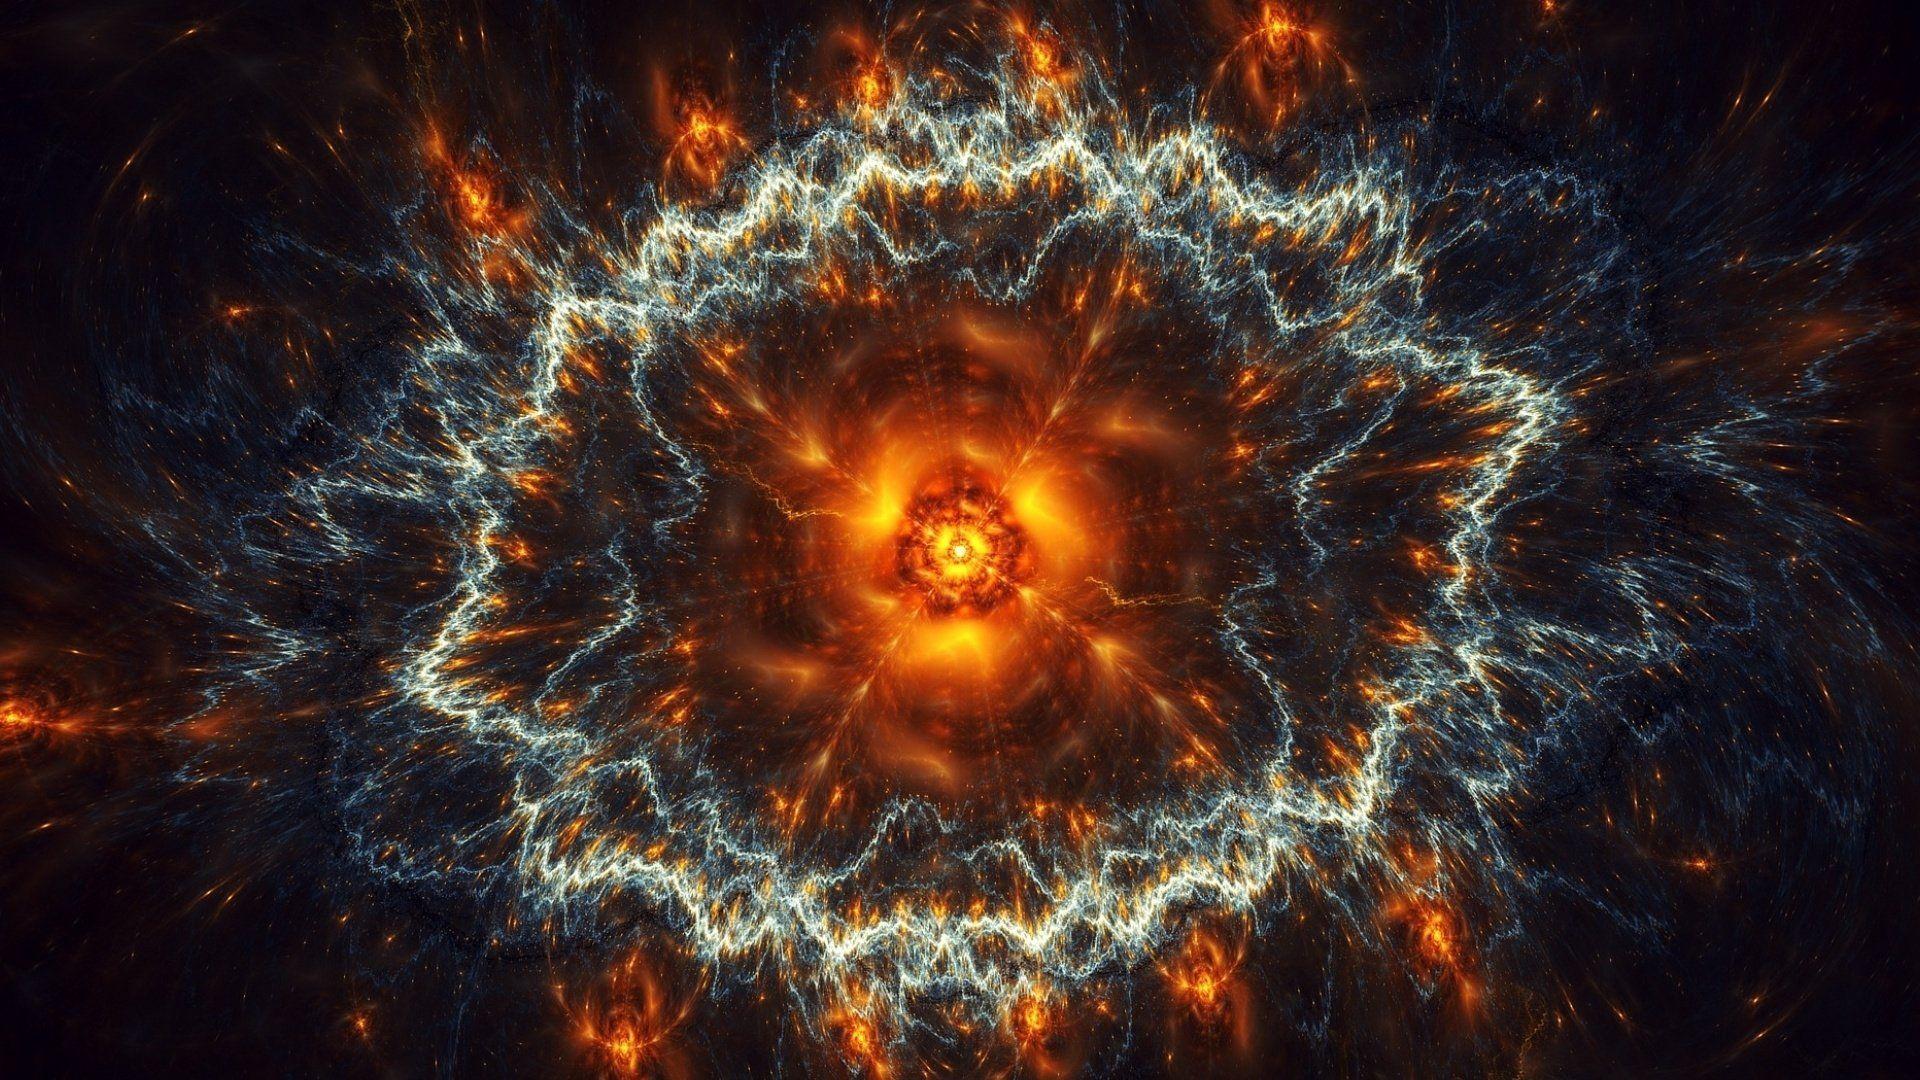 supernova Wallpaper. Supernova Full HD Wallpaper and Background